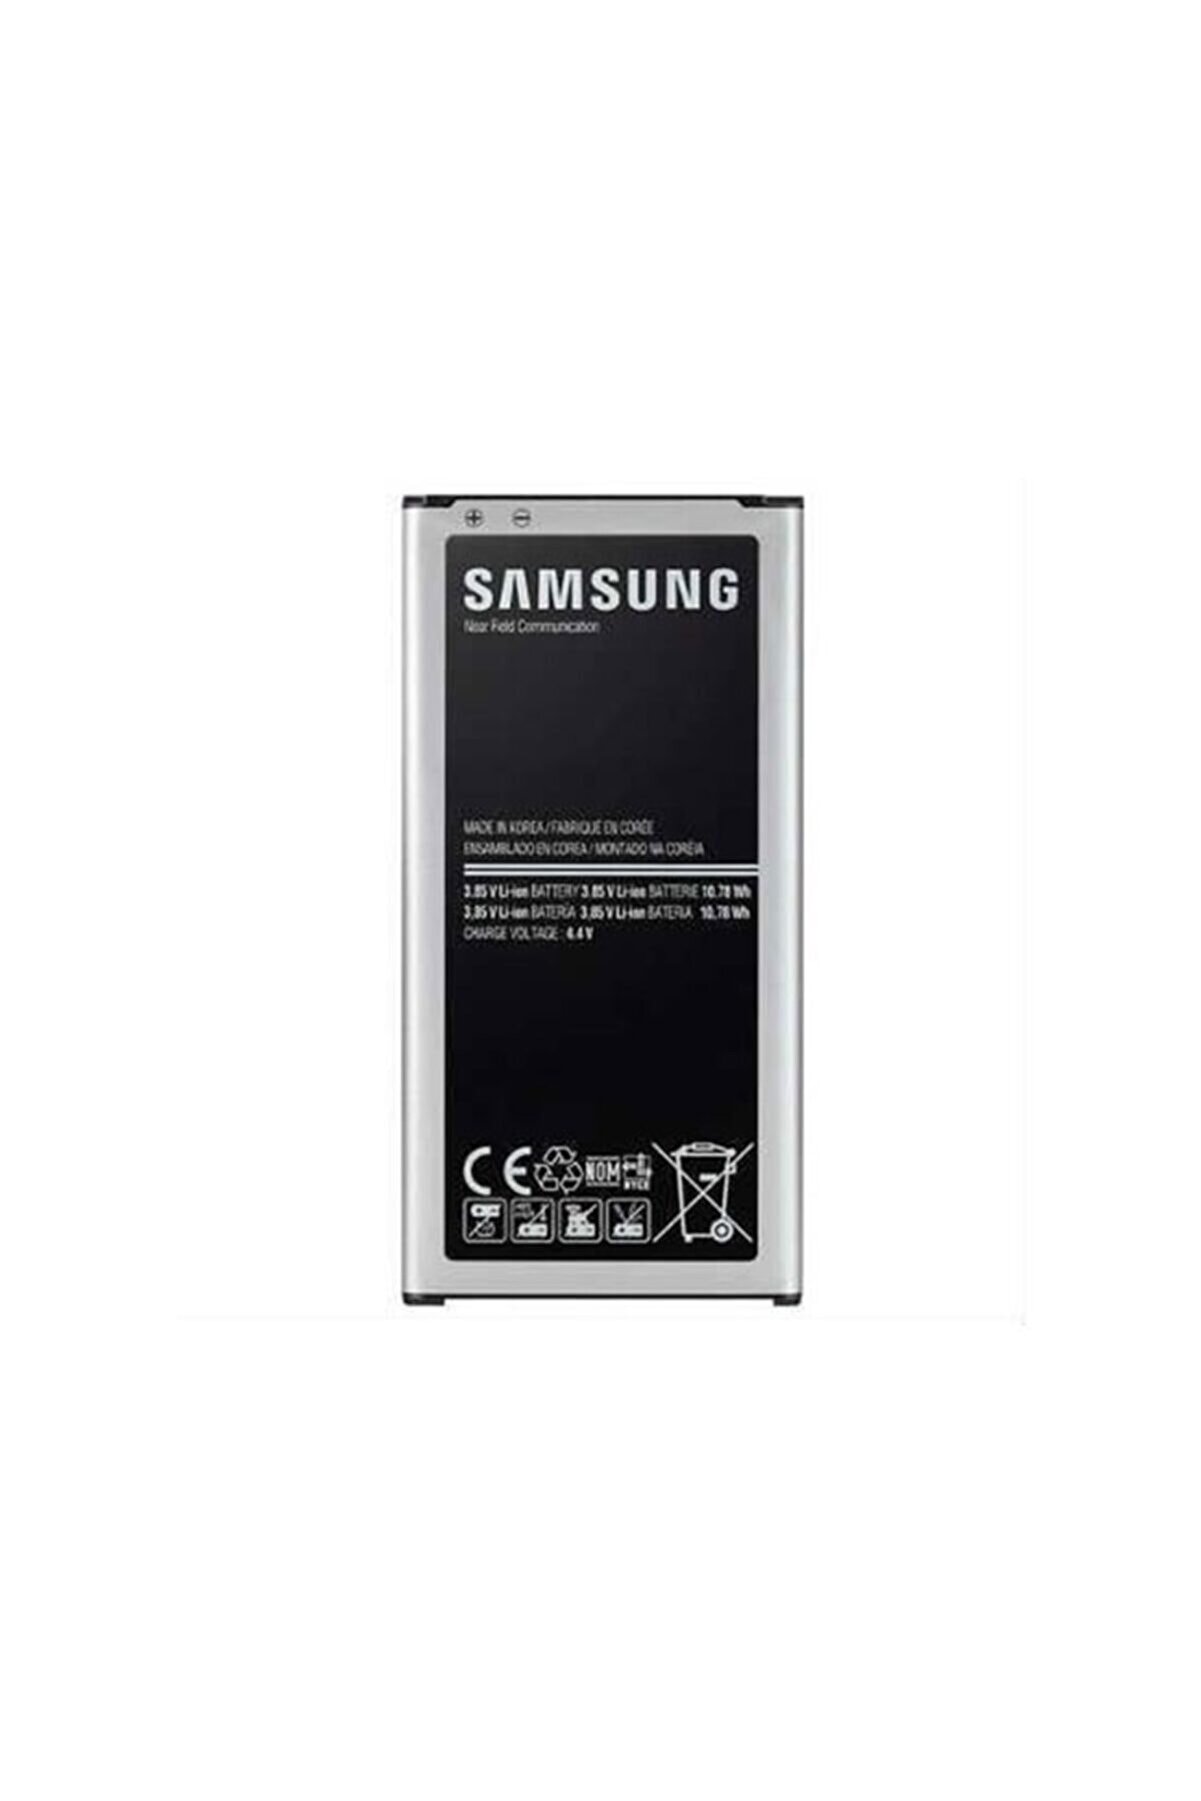 Genel Markalar Samsung Galaxy S5 (sm-g900) Batarya Pil Eb-bg900bbc